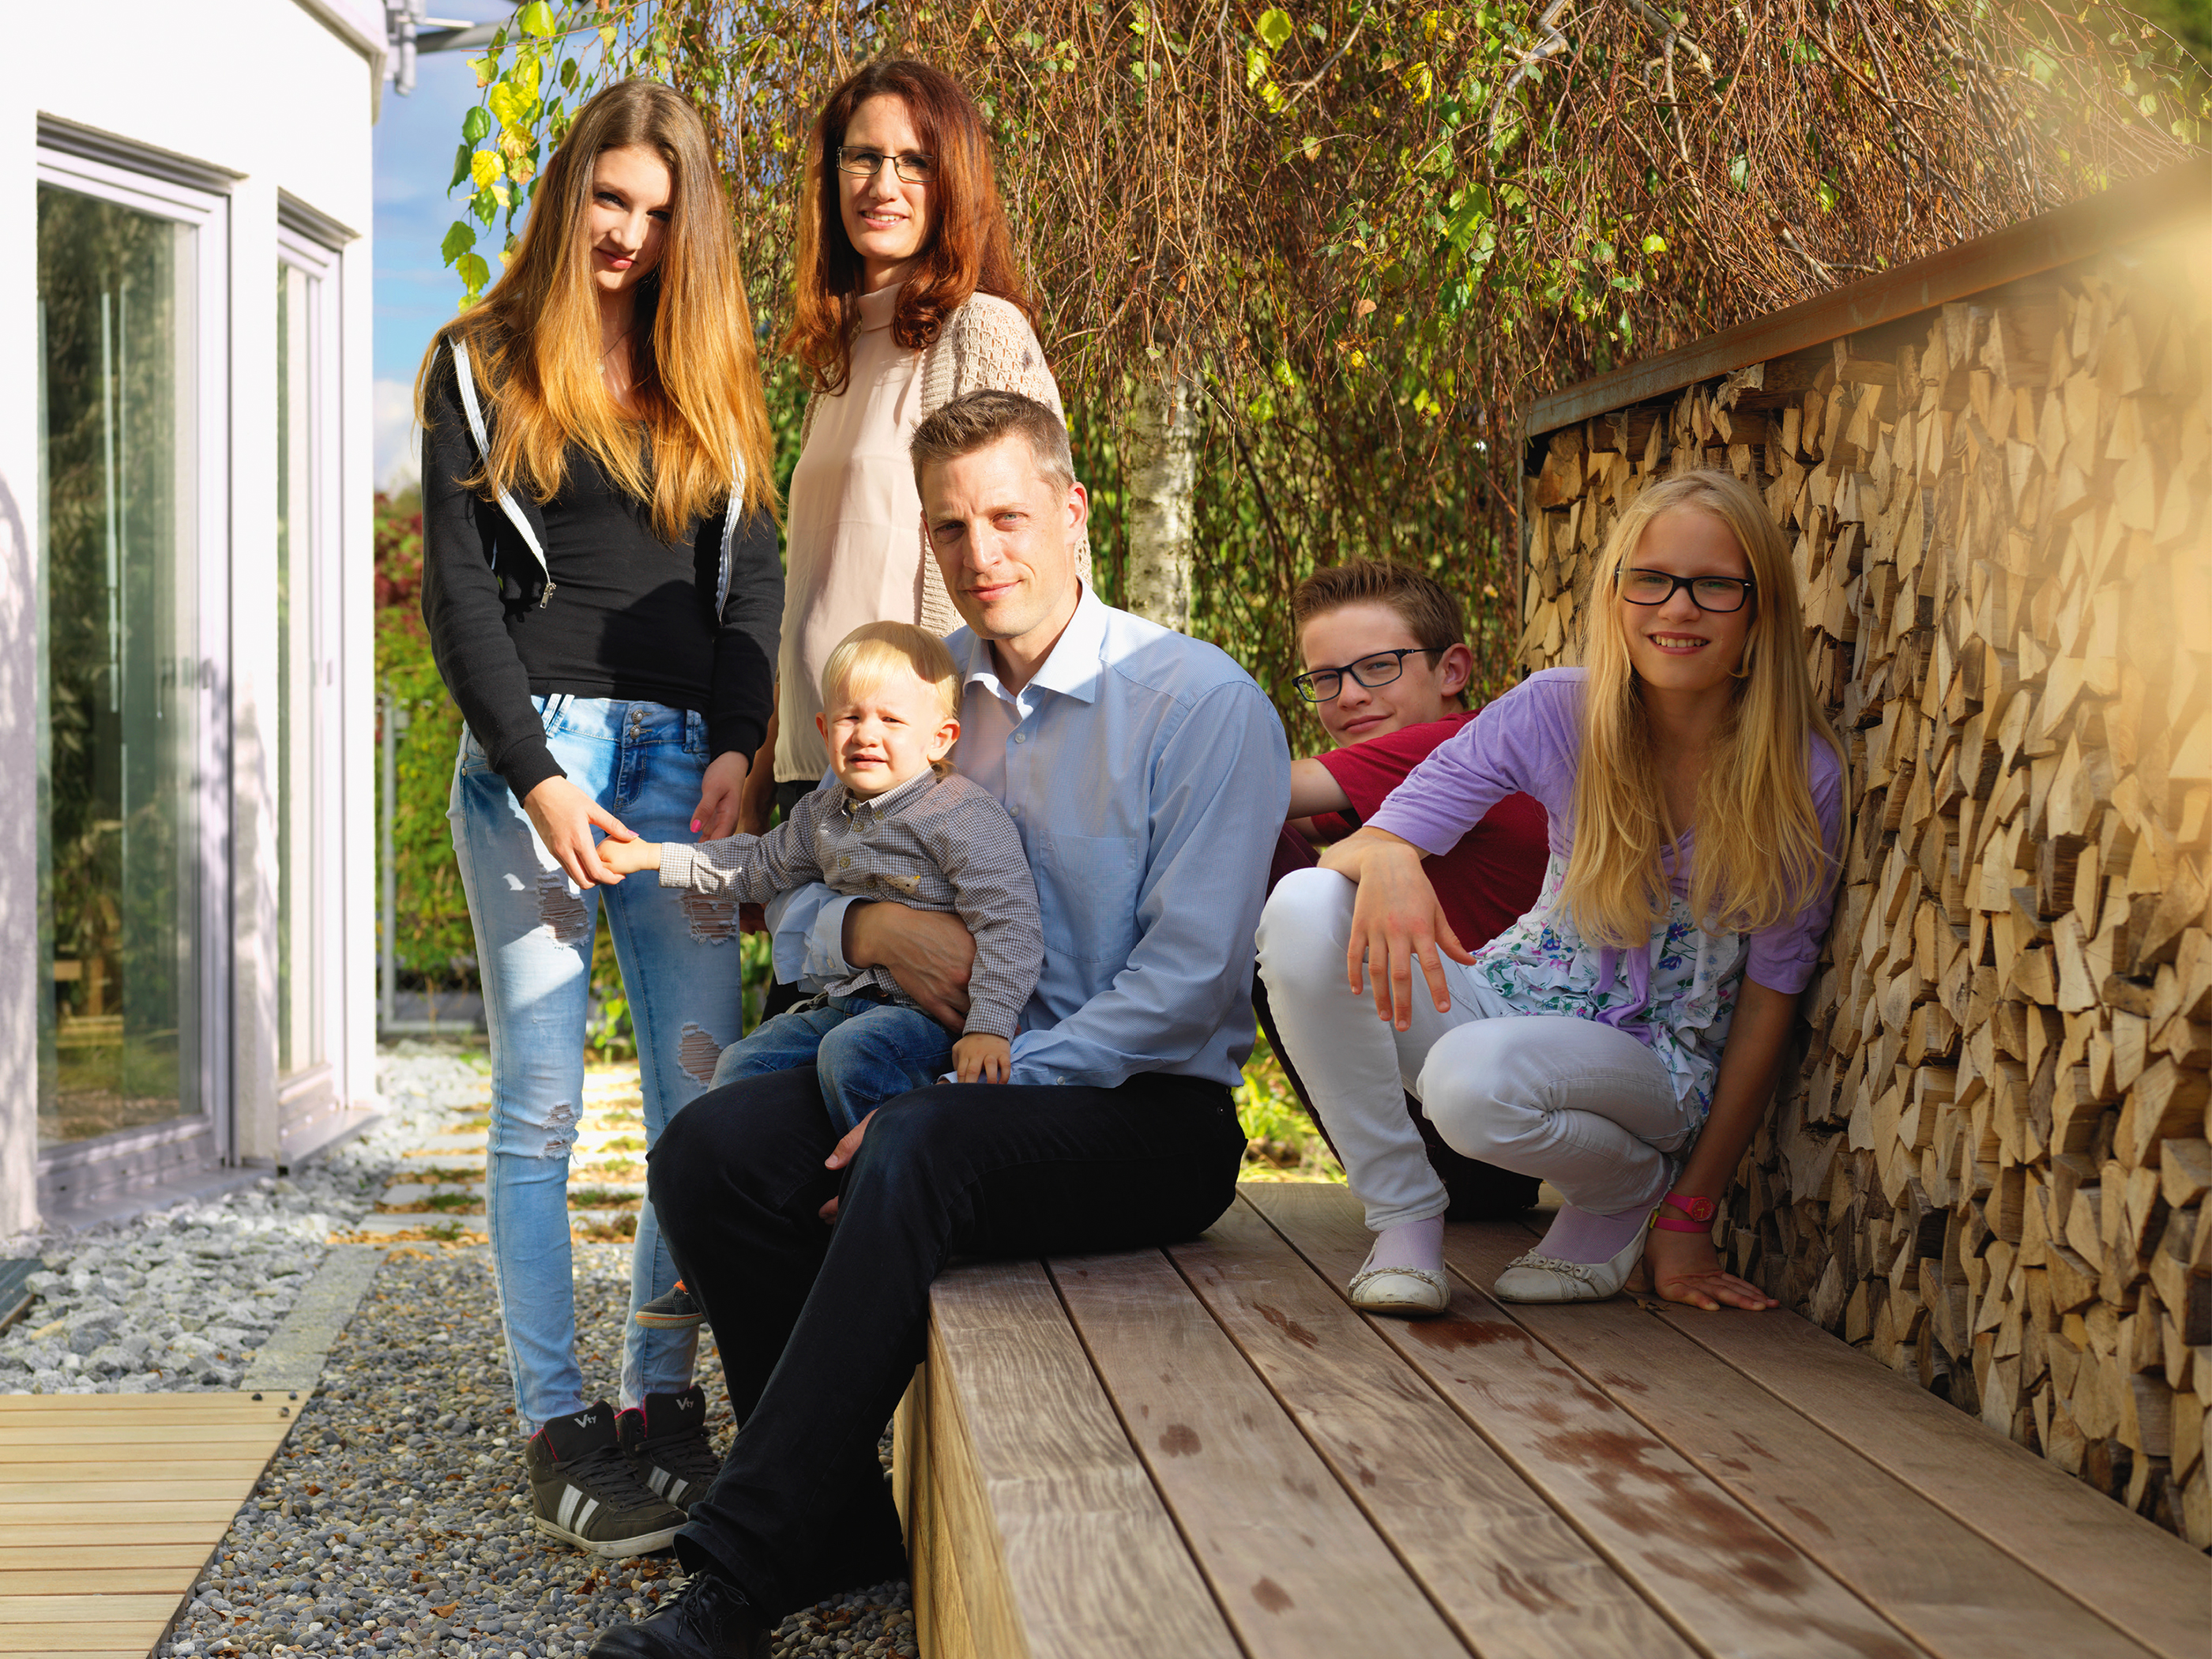 Familie Peter, von links nach rechts: Naomi (16), Franziska Peter(40), Nevin (16 Mt.), Sacha Peter (40), Nicola (14), Noëlle (12)